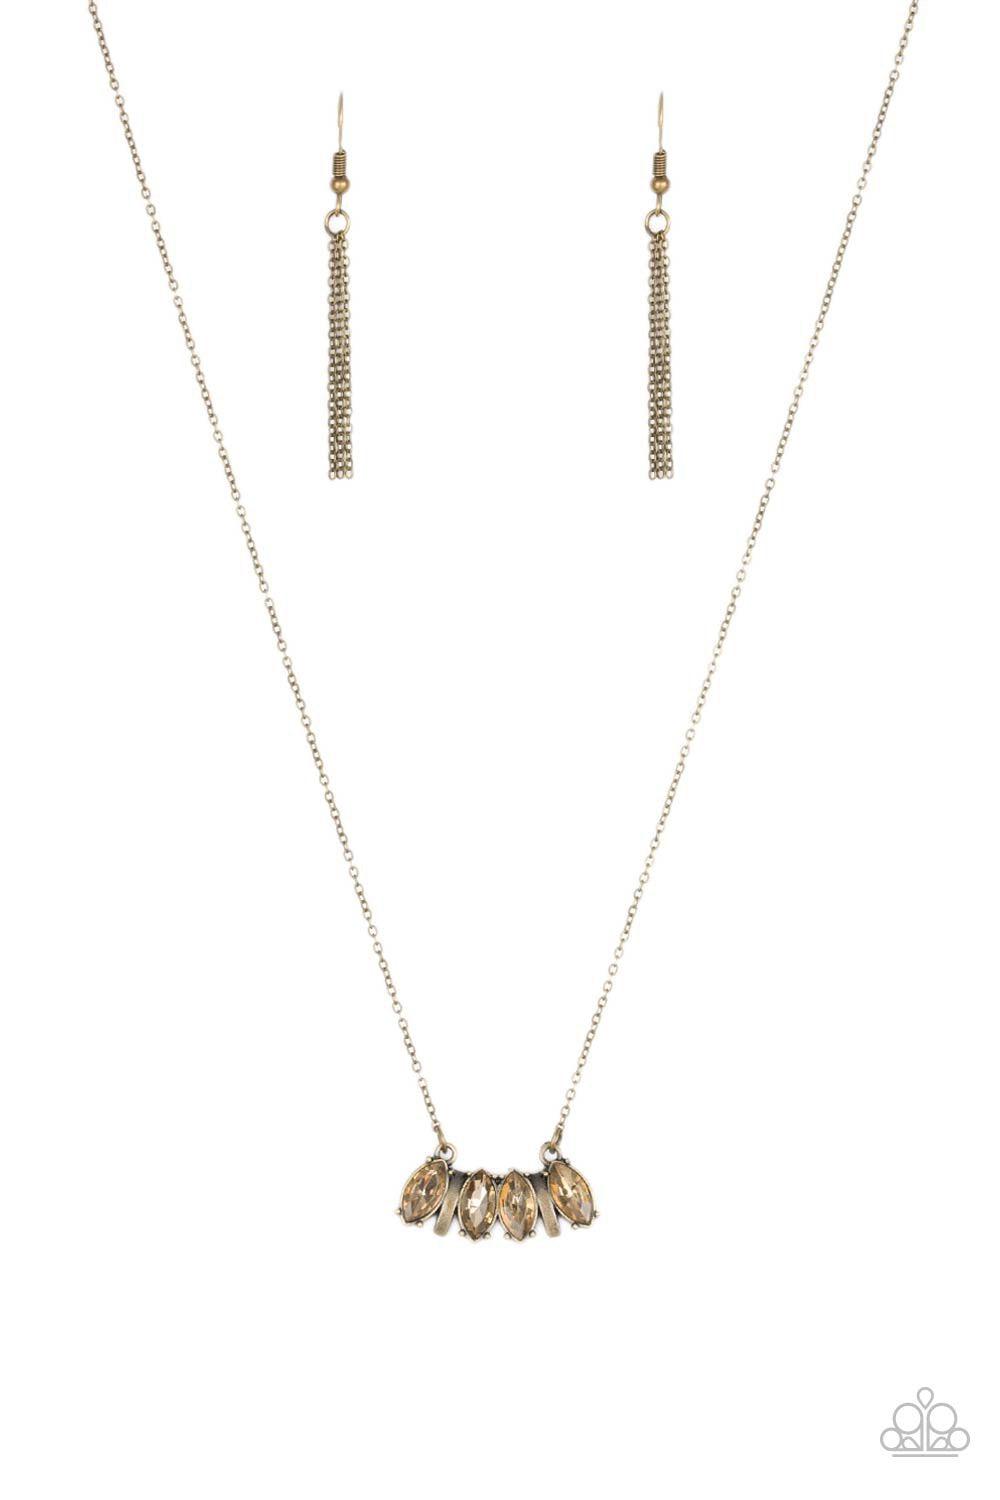 Deco Decadence Brass Necklace - Paparazzi Accessories- lightbox - CarasShop.com - $5 Jewelry by Cara Jewels